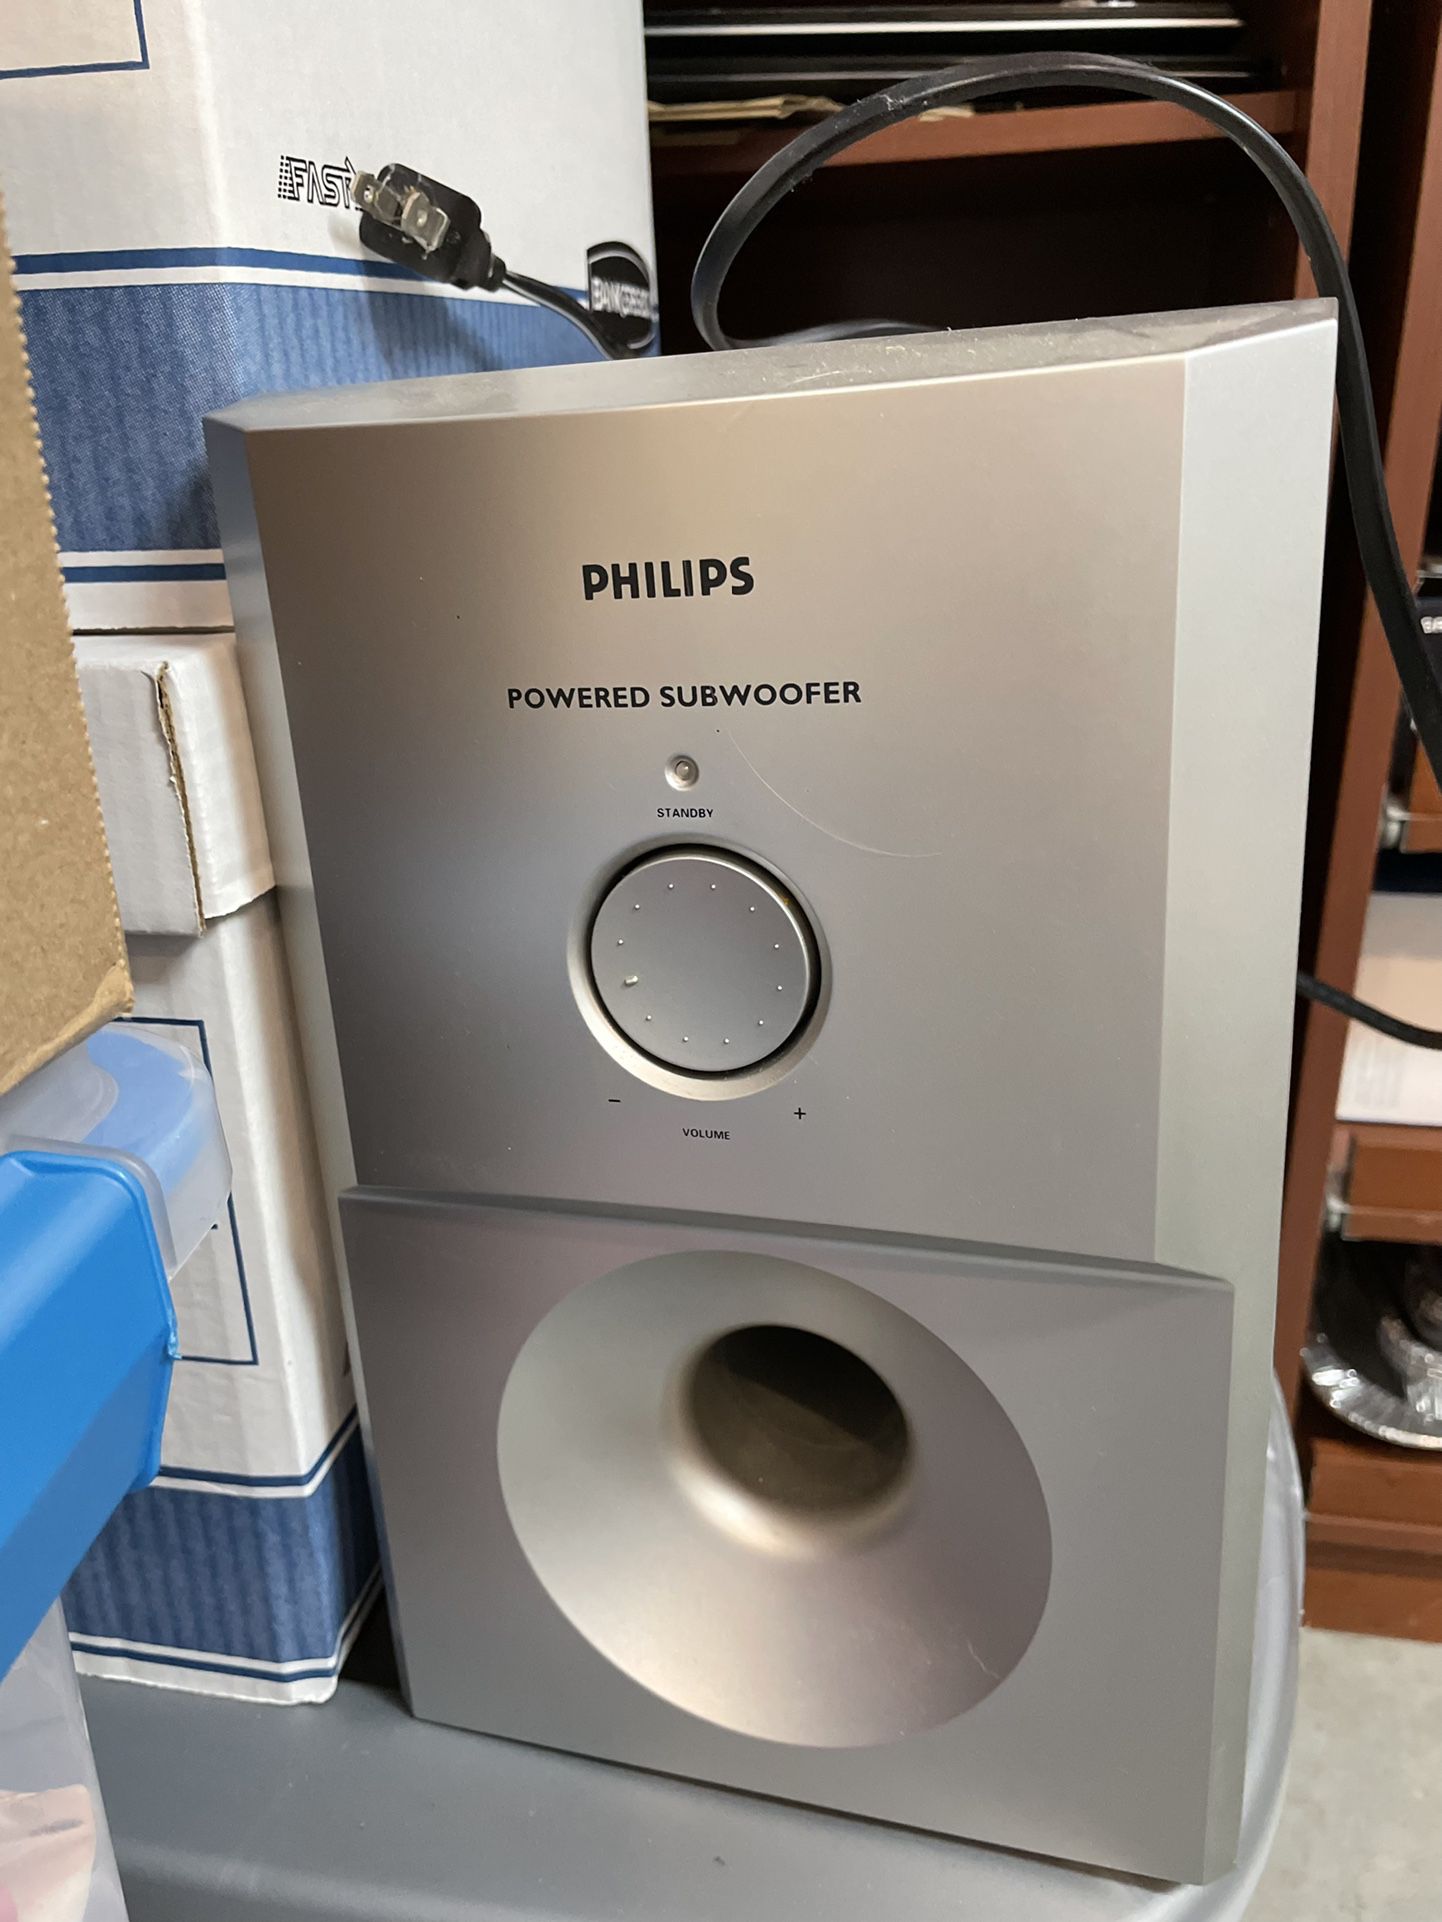 tempo Væk Pengeudlån Philips Powered Subwoofer Speaker for Sale in Snellville, GA - OfferUp